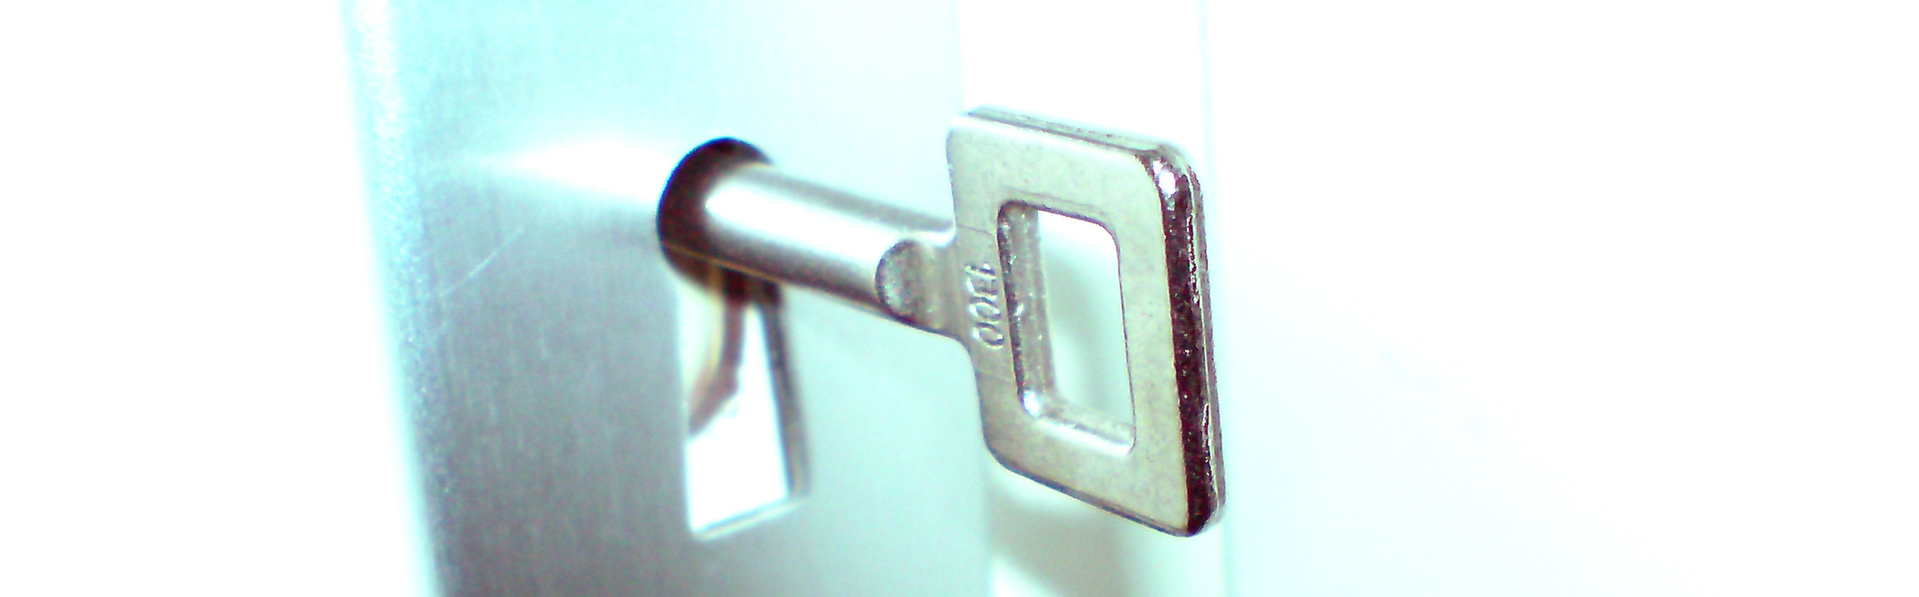 lock and key locksmith products on light background